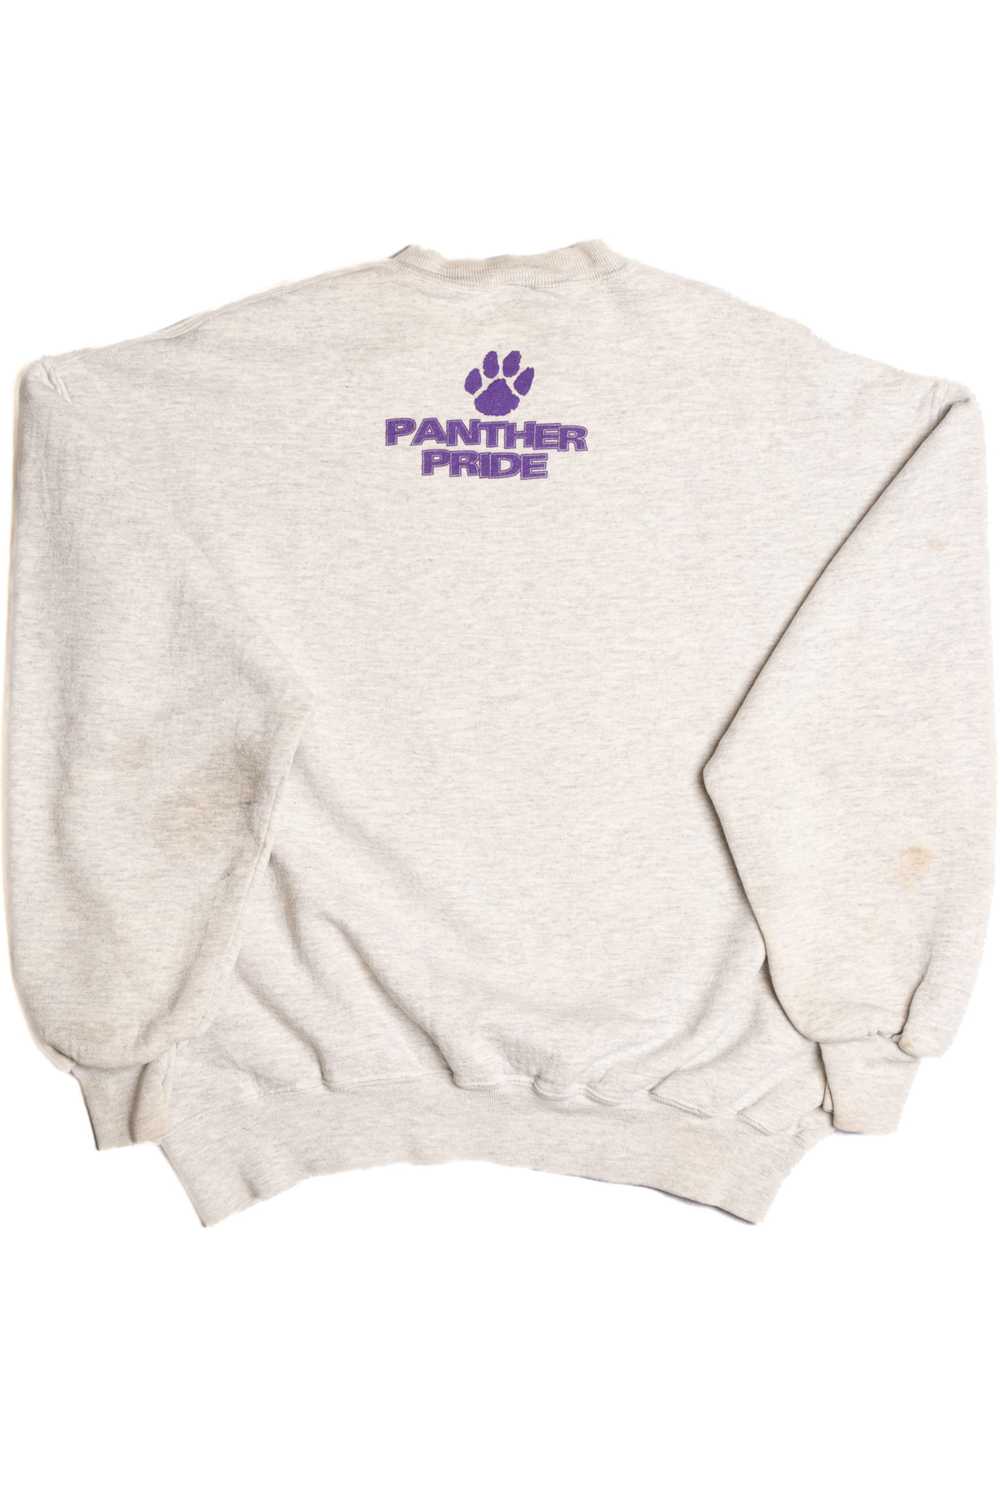 Saratoga Panthers Sweatshirt 9027 - image 3